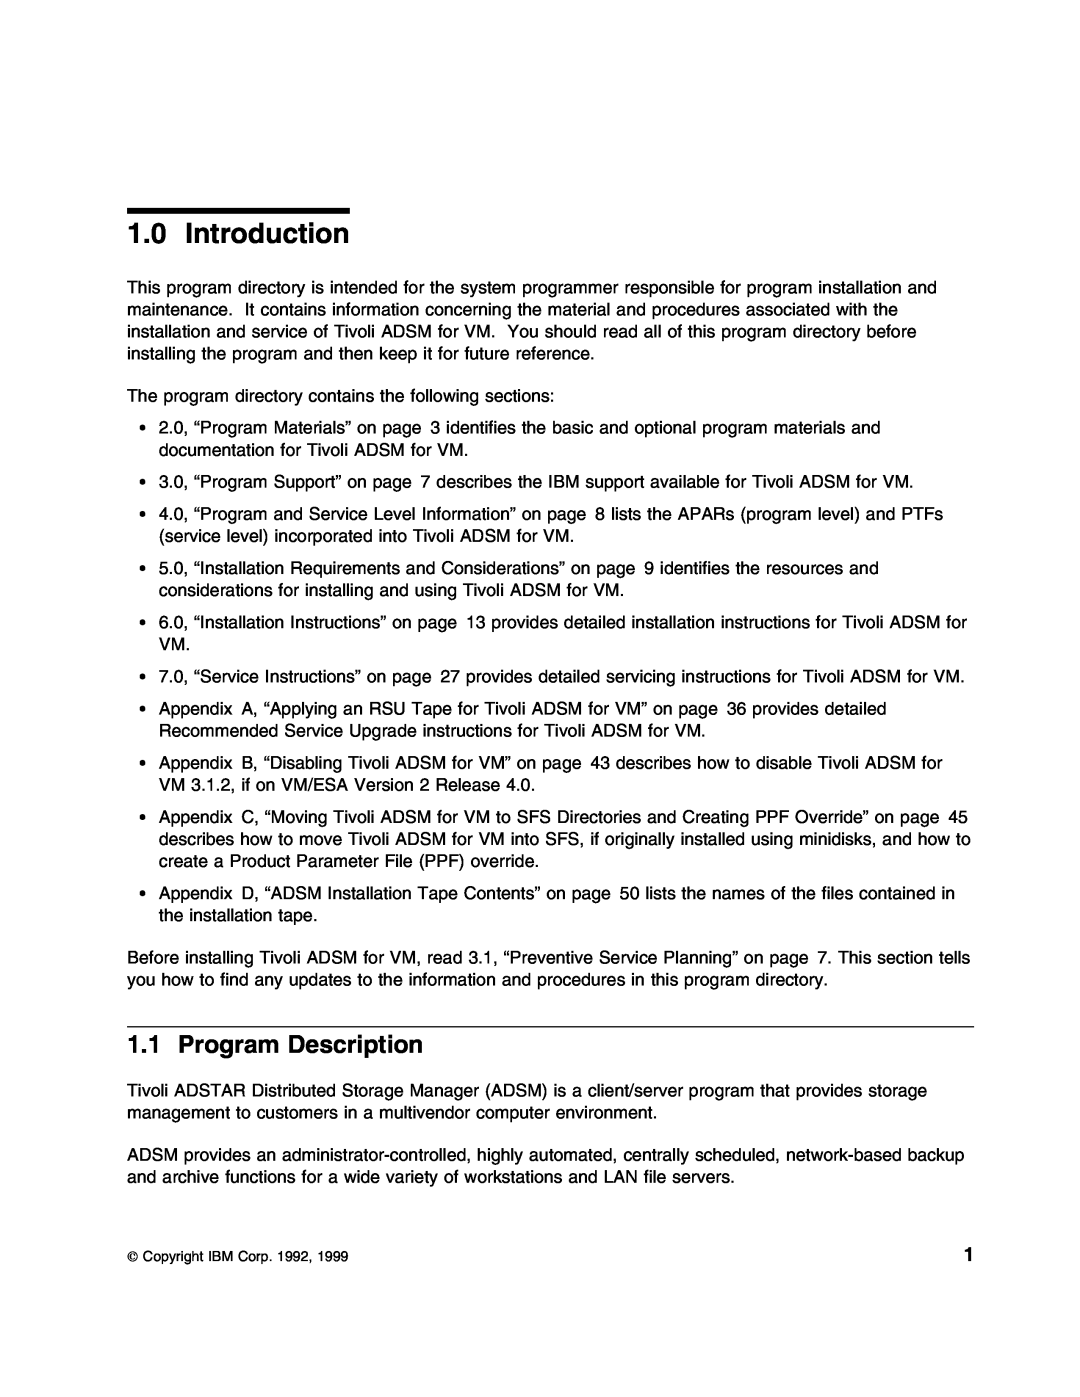 IBM 5697-VM3 manual Introduction, Program Description 